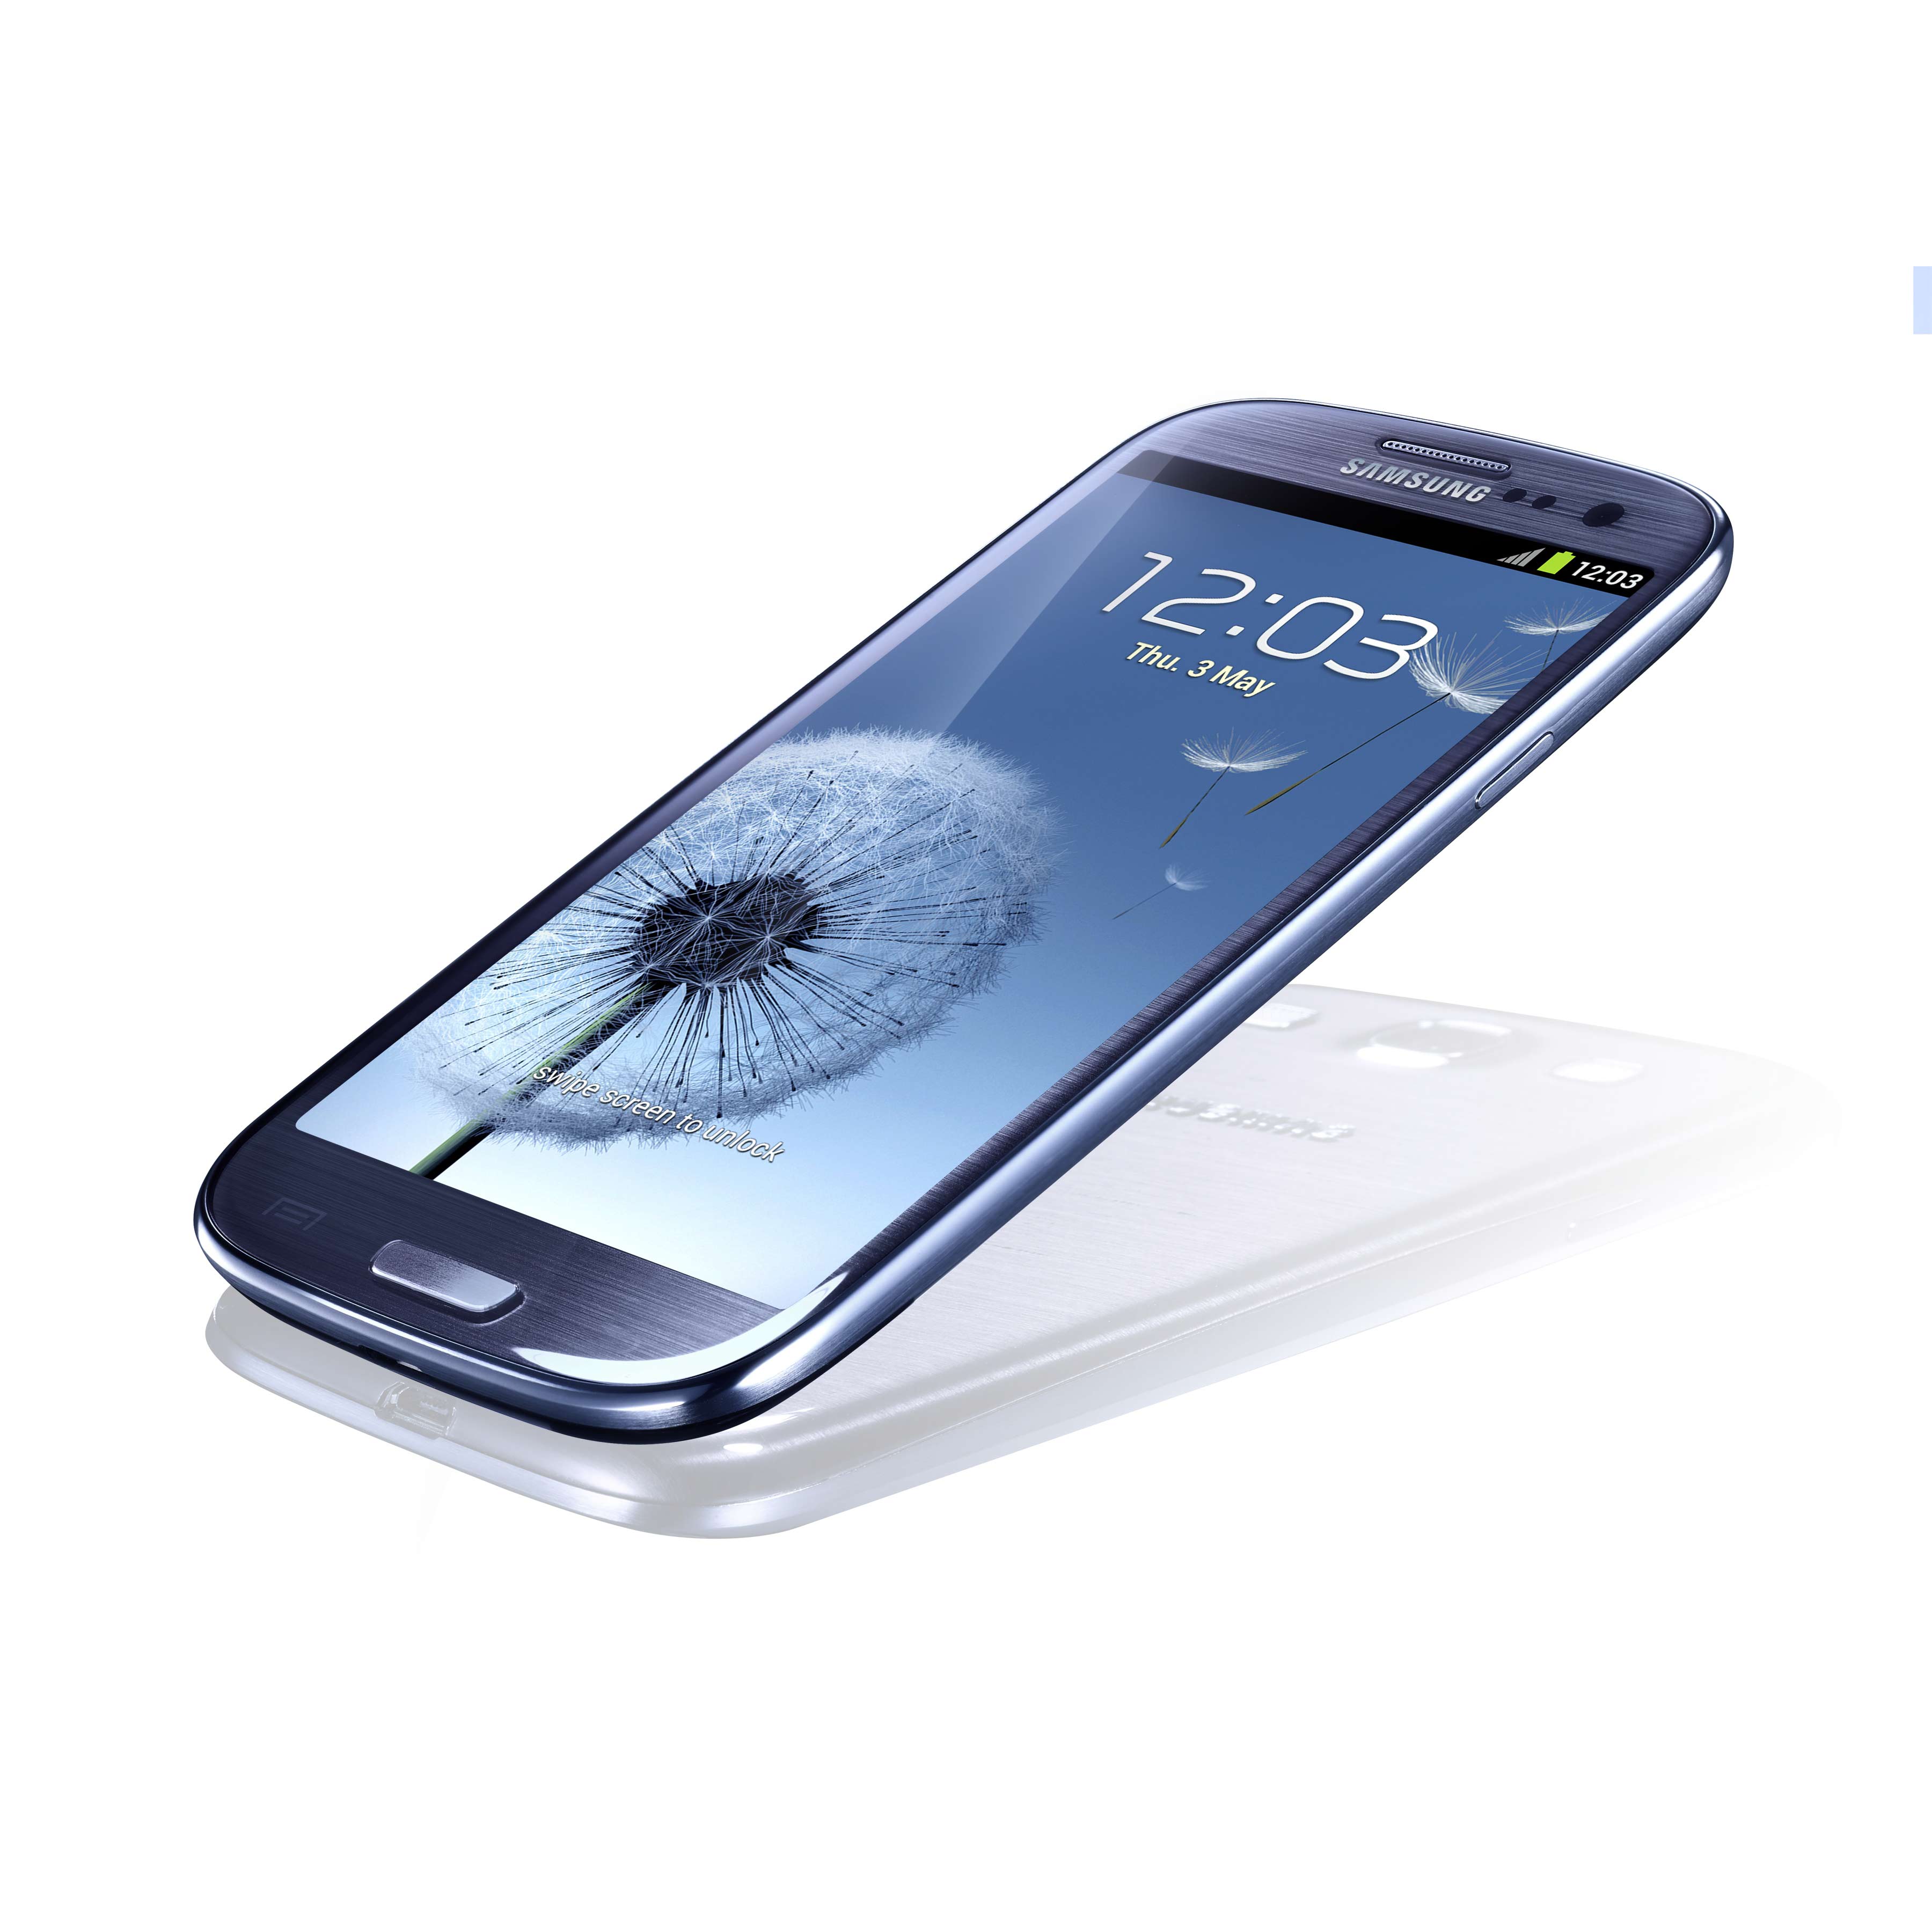 Сегодня телефон купили. Samsung Galaxy s3 16gb. Samsung Galaxy s III gt-i9300. Samsung Galaxy s3 Neo. Samsung Galaxy s III gt-i9300 16gb.